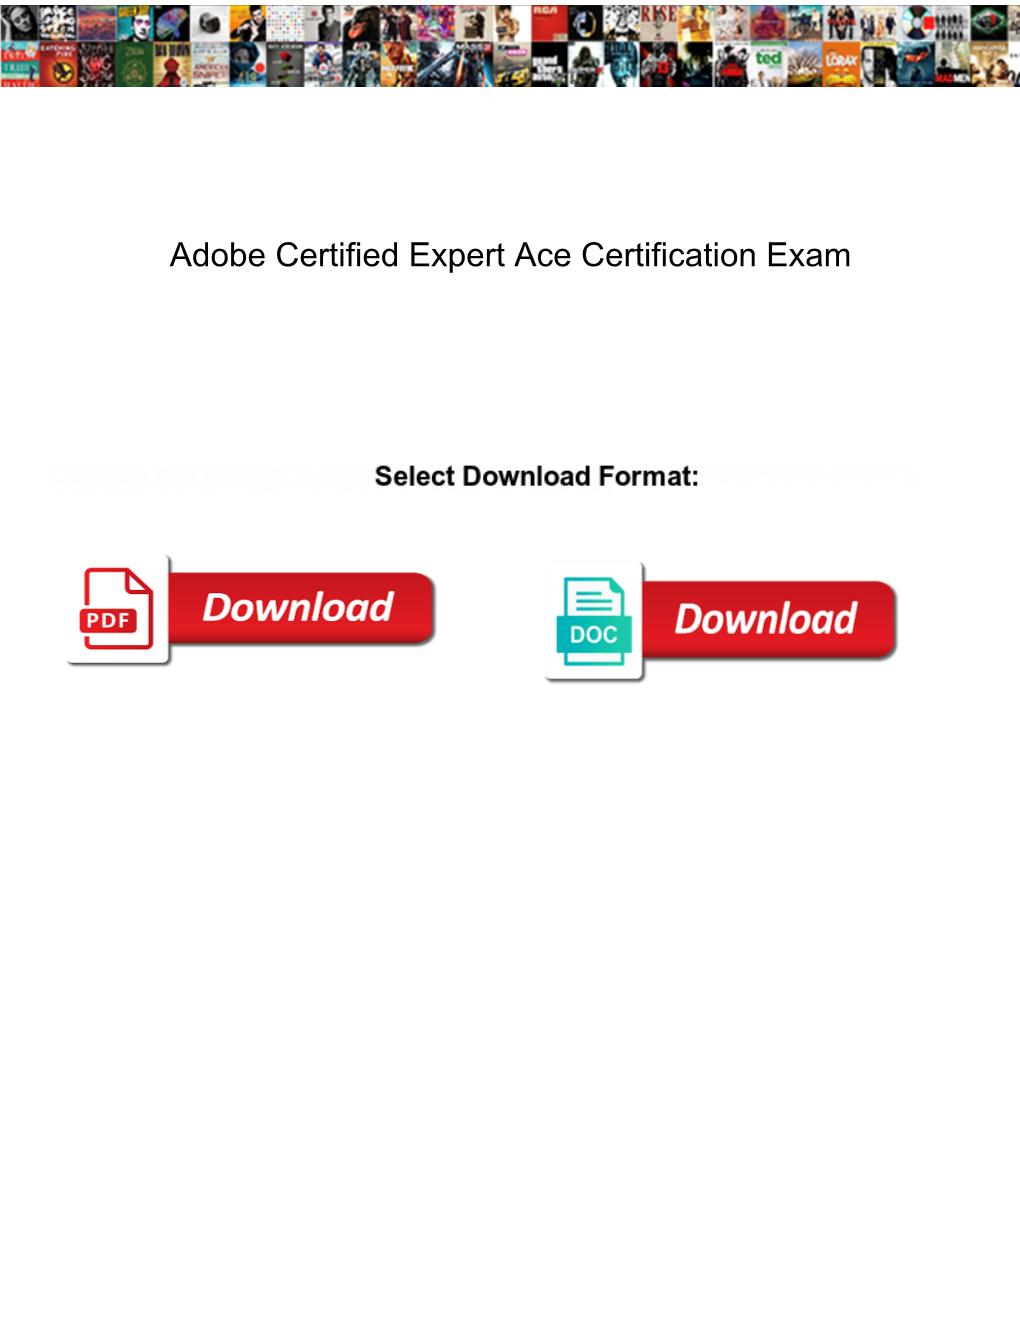 Adobe Certified Expert Ace Certification Exam